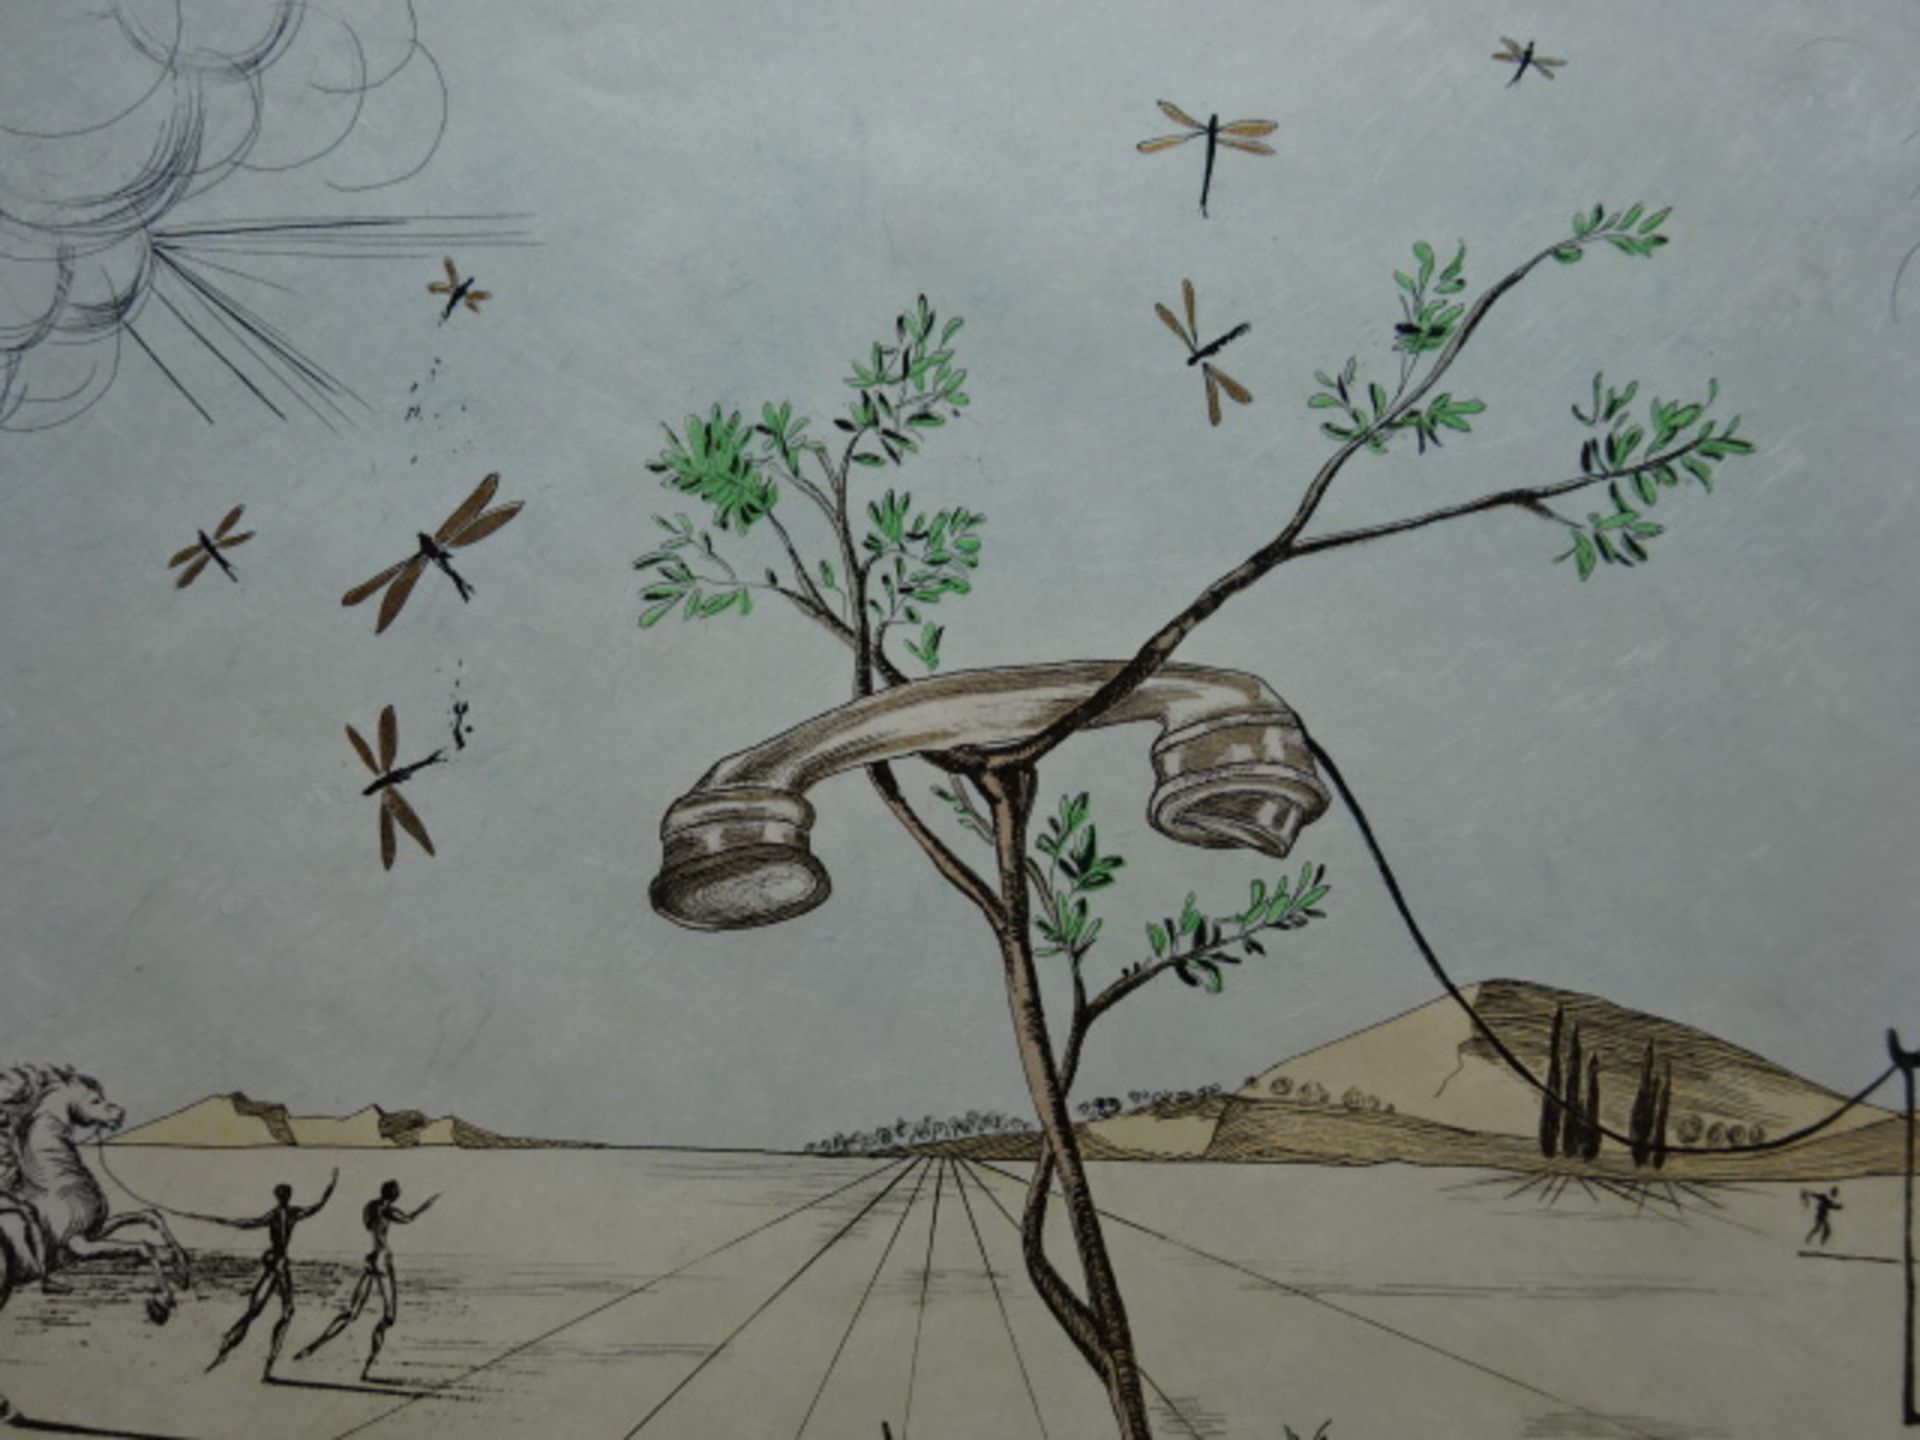 Dalí - Körperloses Telefon in Wüste - Image 3 of 8